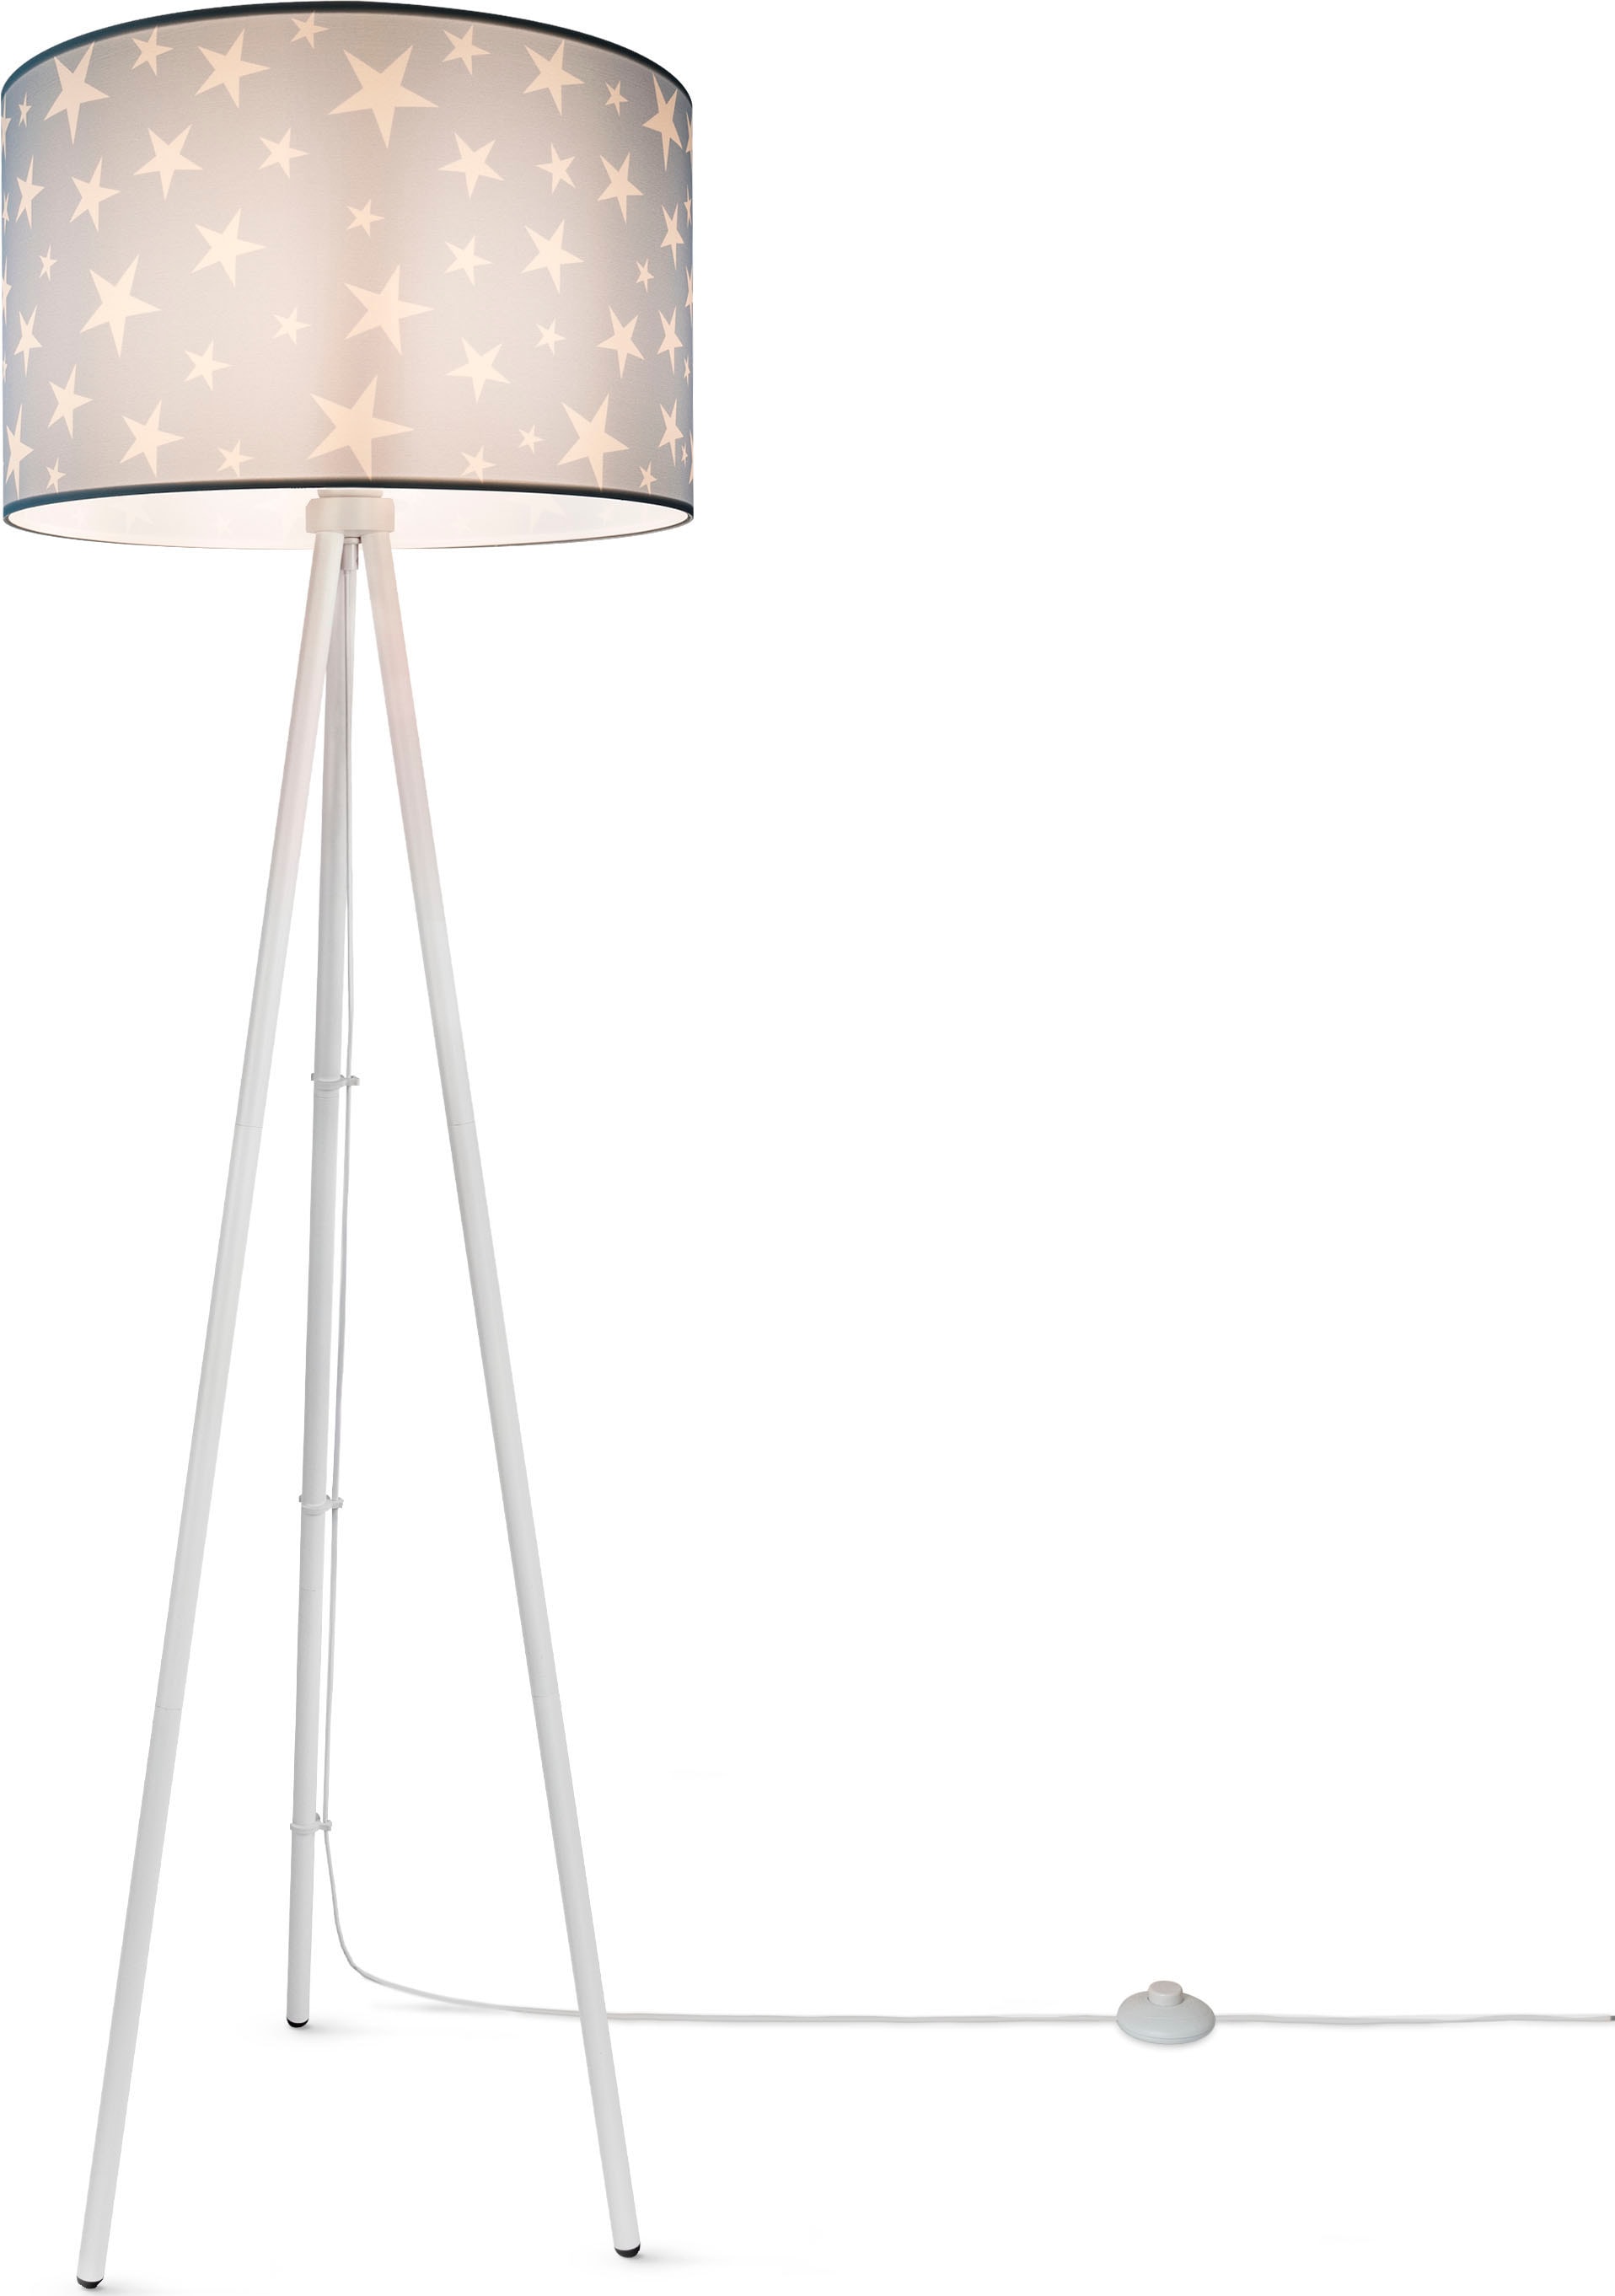 Paco Home Stehlampe »Trina Capri«, Kinderlampe LED Kinderzimmer, Sternen-Motiv, Deko Stehleuchte E27